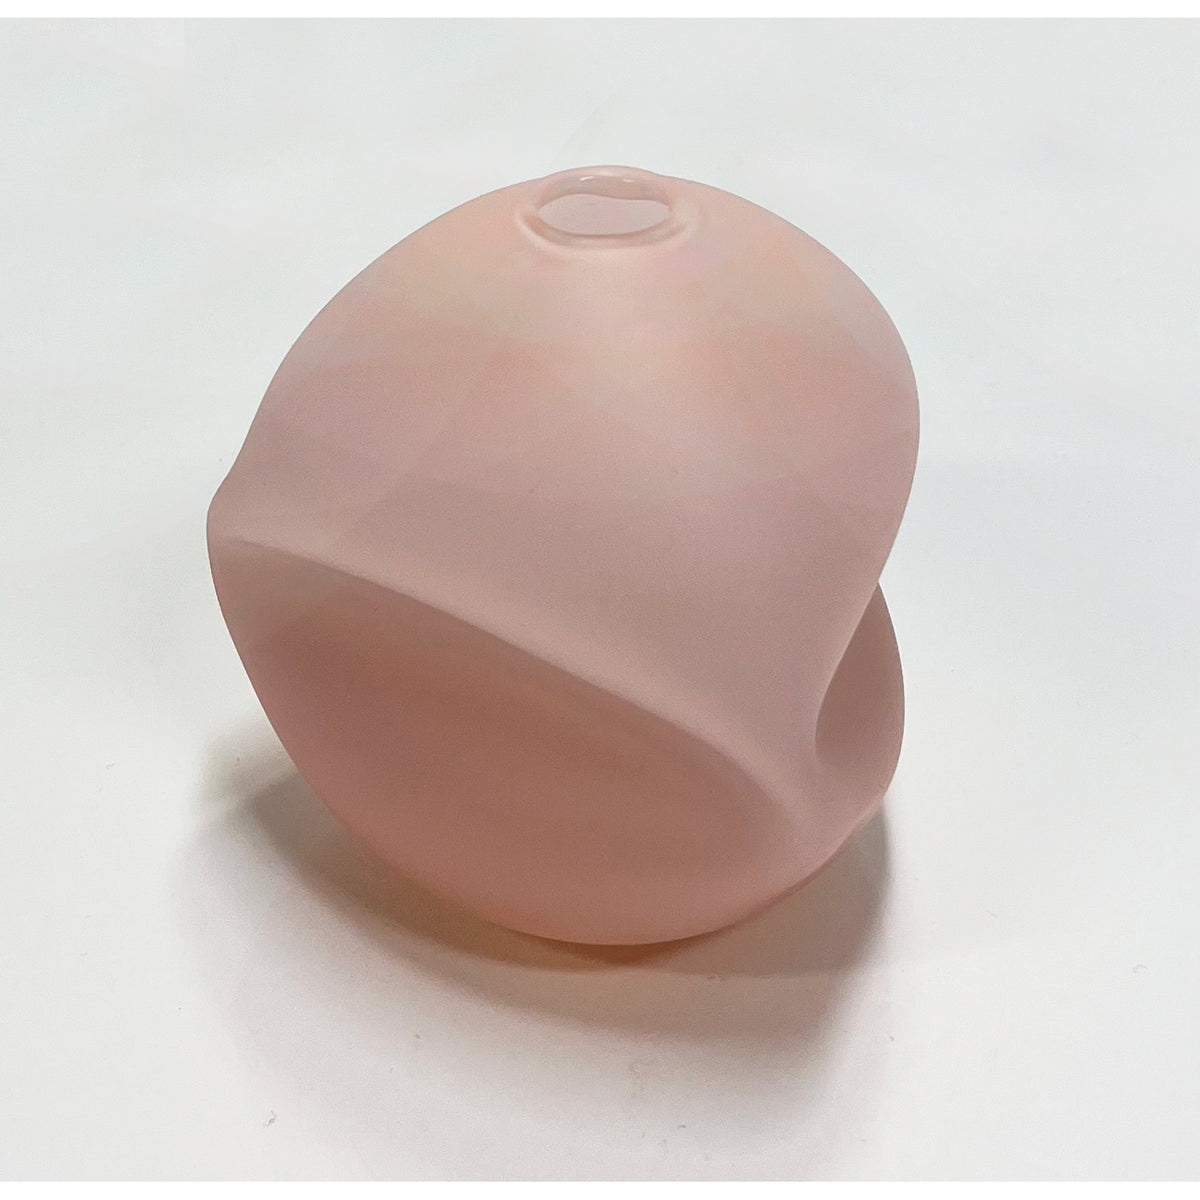 Goodbeast Design - Small Dusty Pink Pebble Vase, 4" x 4" x 4"